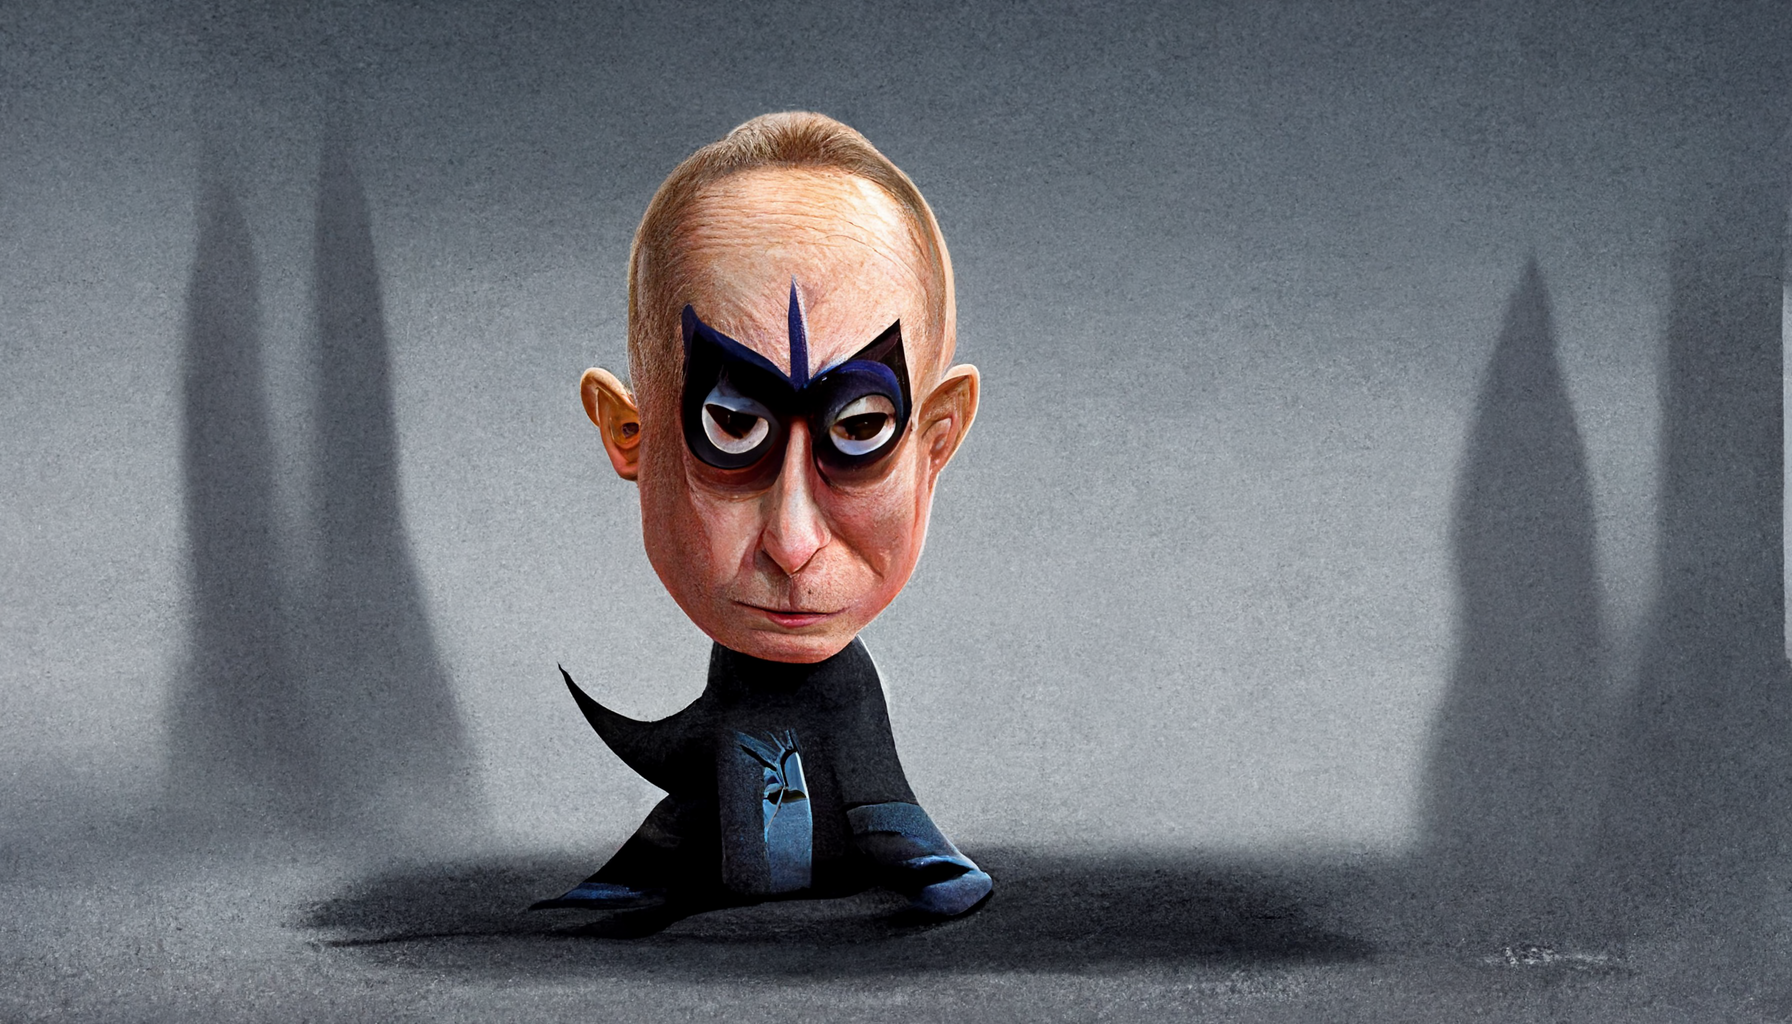 Vladimir Putin dressed as Syndrome from the Incredibles, Pixar cartoon (Midjourney)